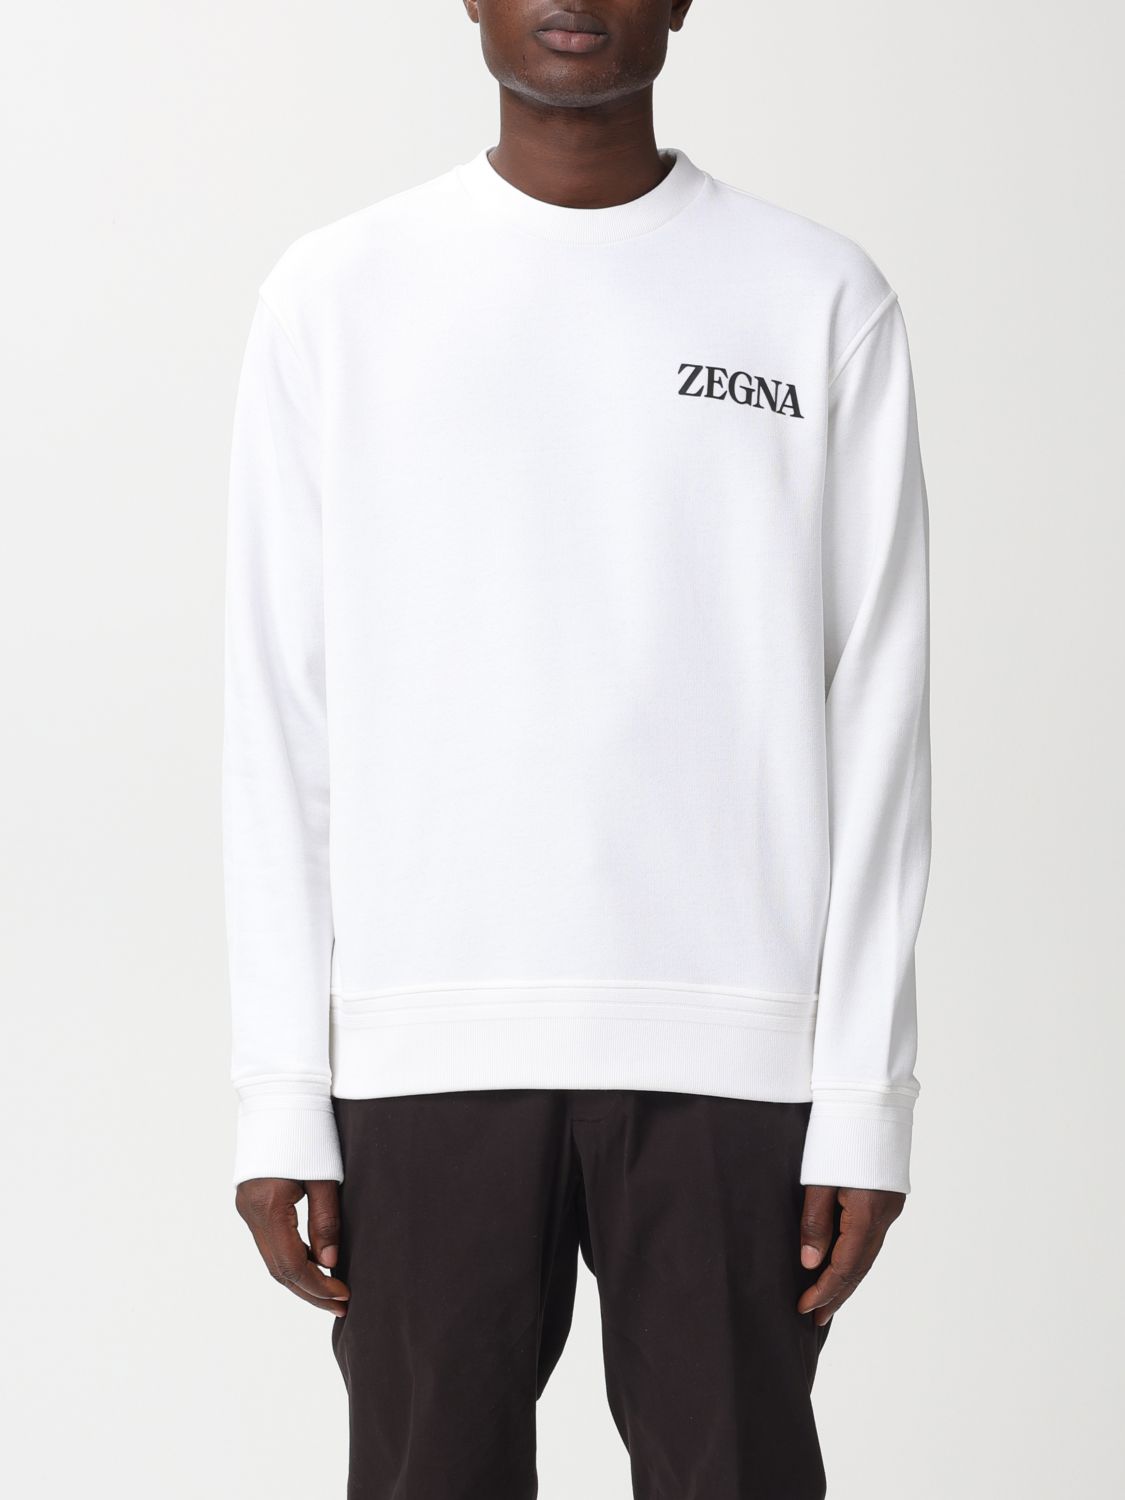 ZEGNA: Sweatshirt homme - Gris  Sweatshirt Zegna UC522A6C872 en ligne sur